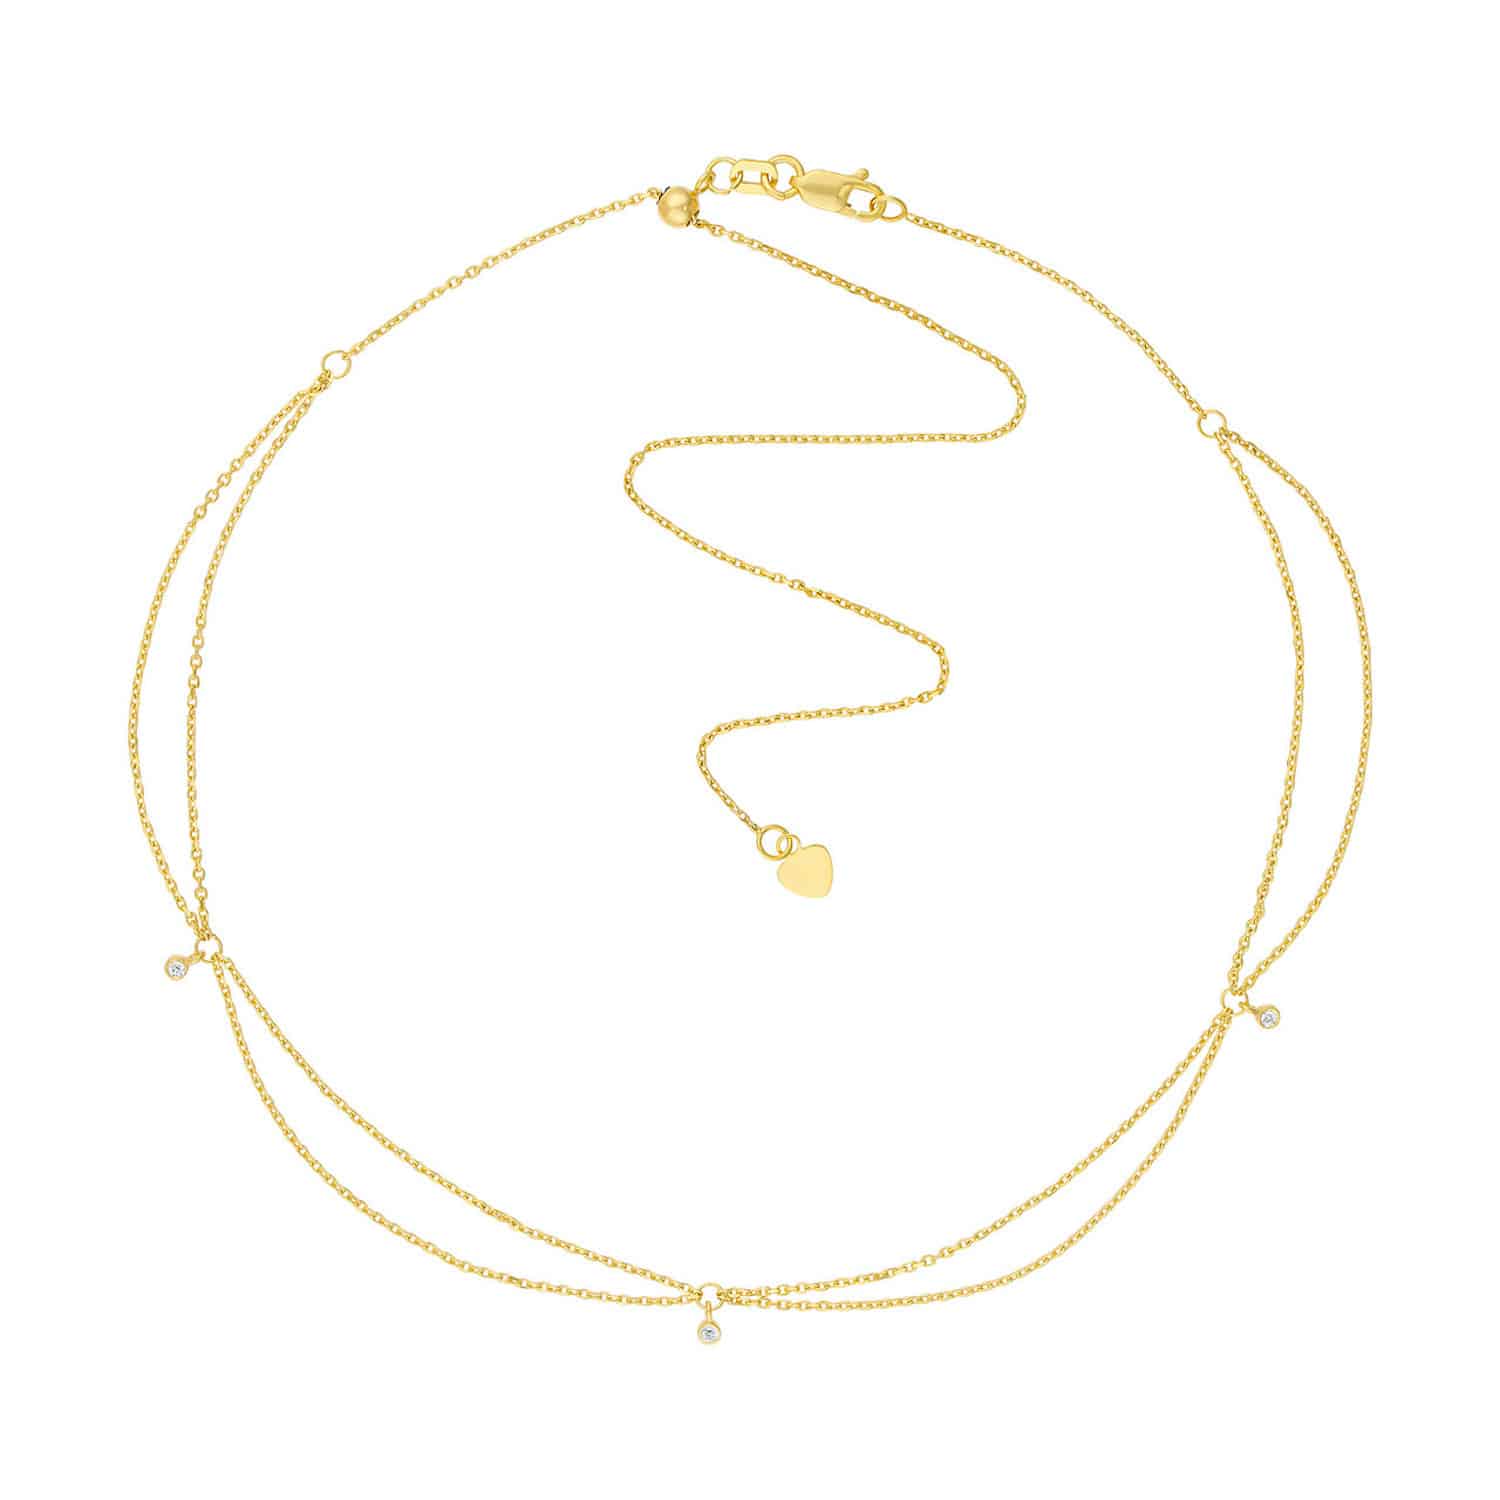 Natural Diamond 14K Yellow Gold Drape Chain Choker Necklace 15"-17" Adjustable